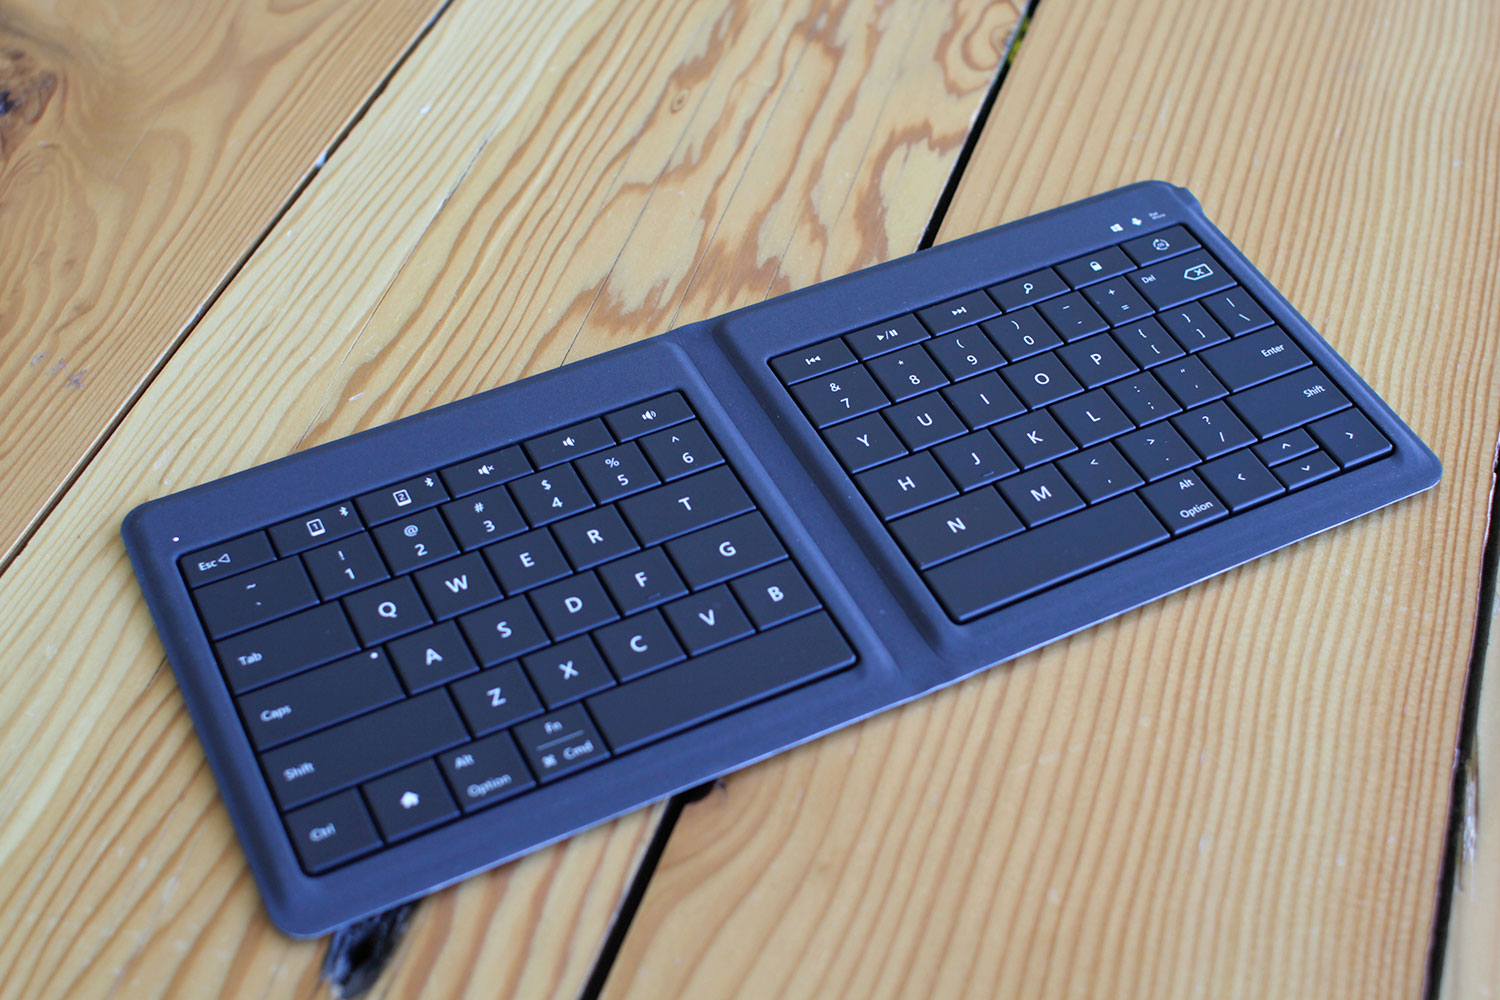 Microsoft Universal Foldable Keyboard mobile Bluetooth keyboard